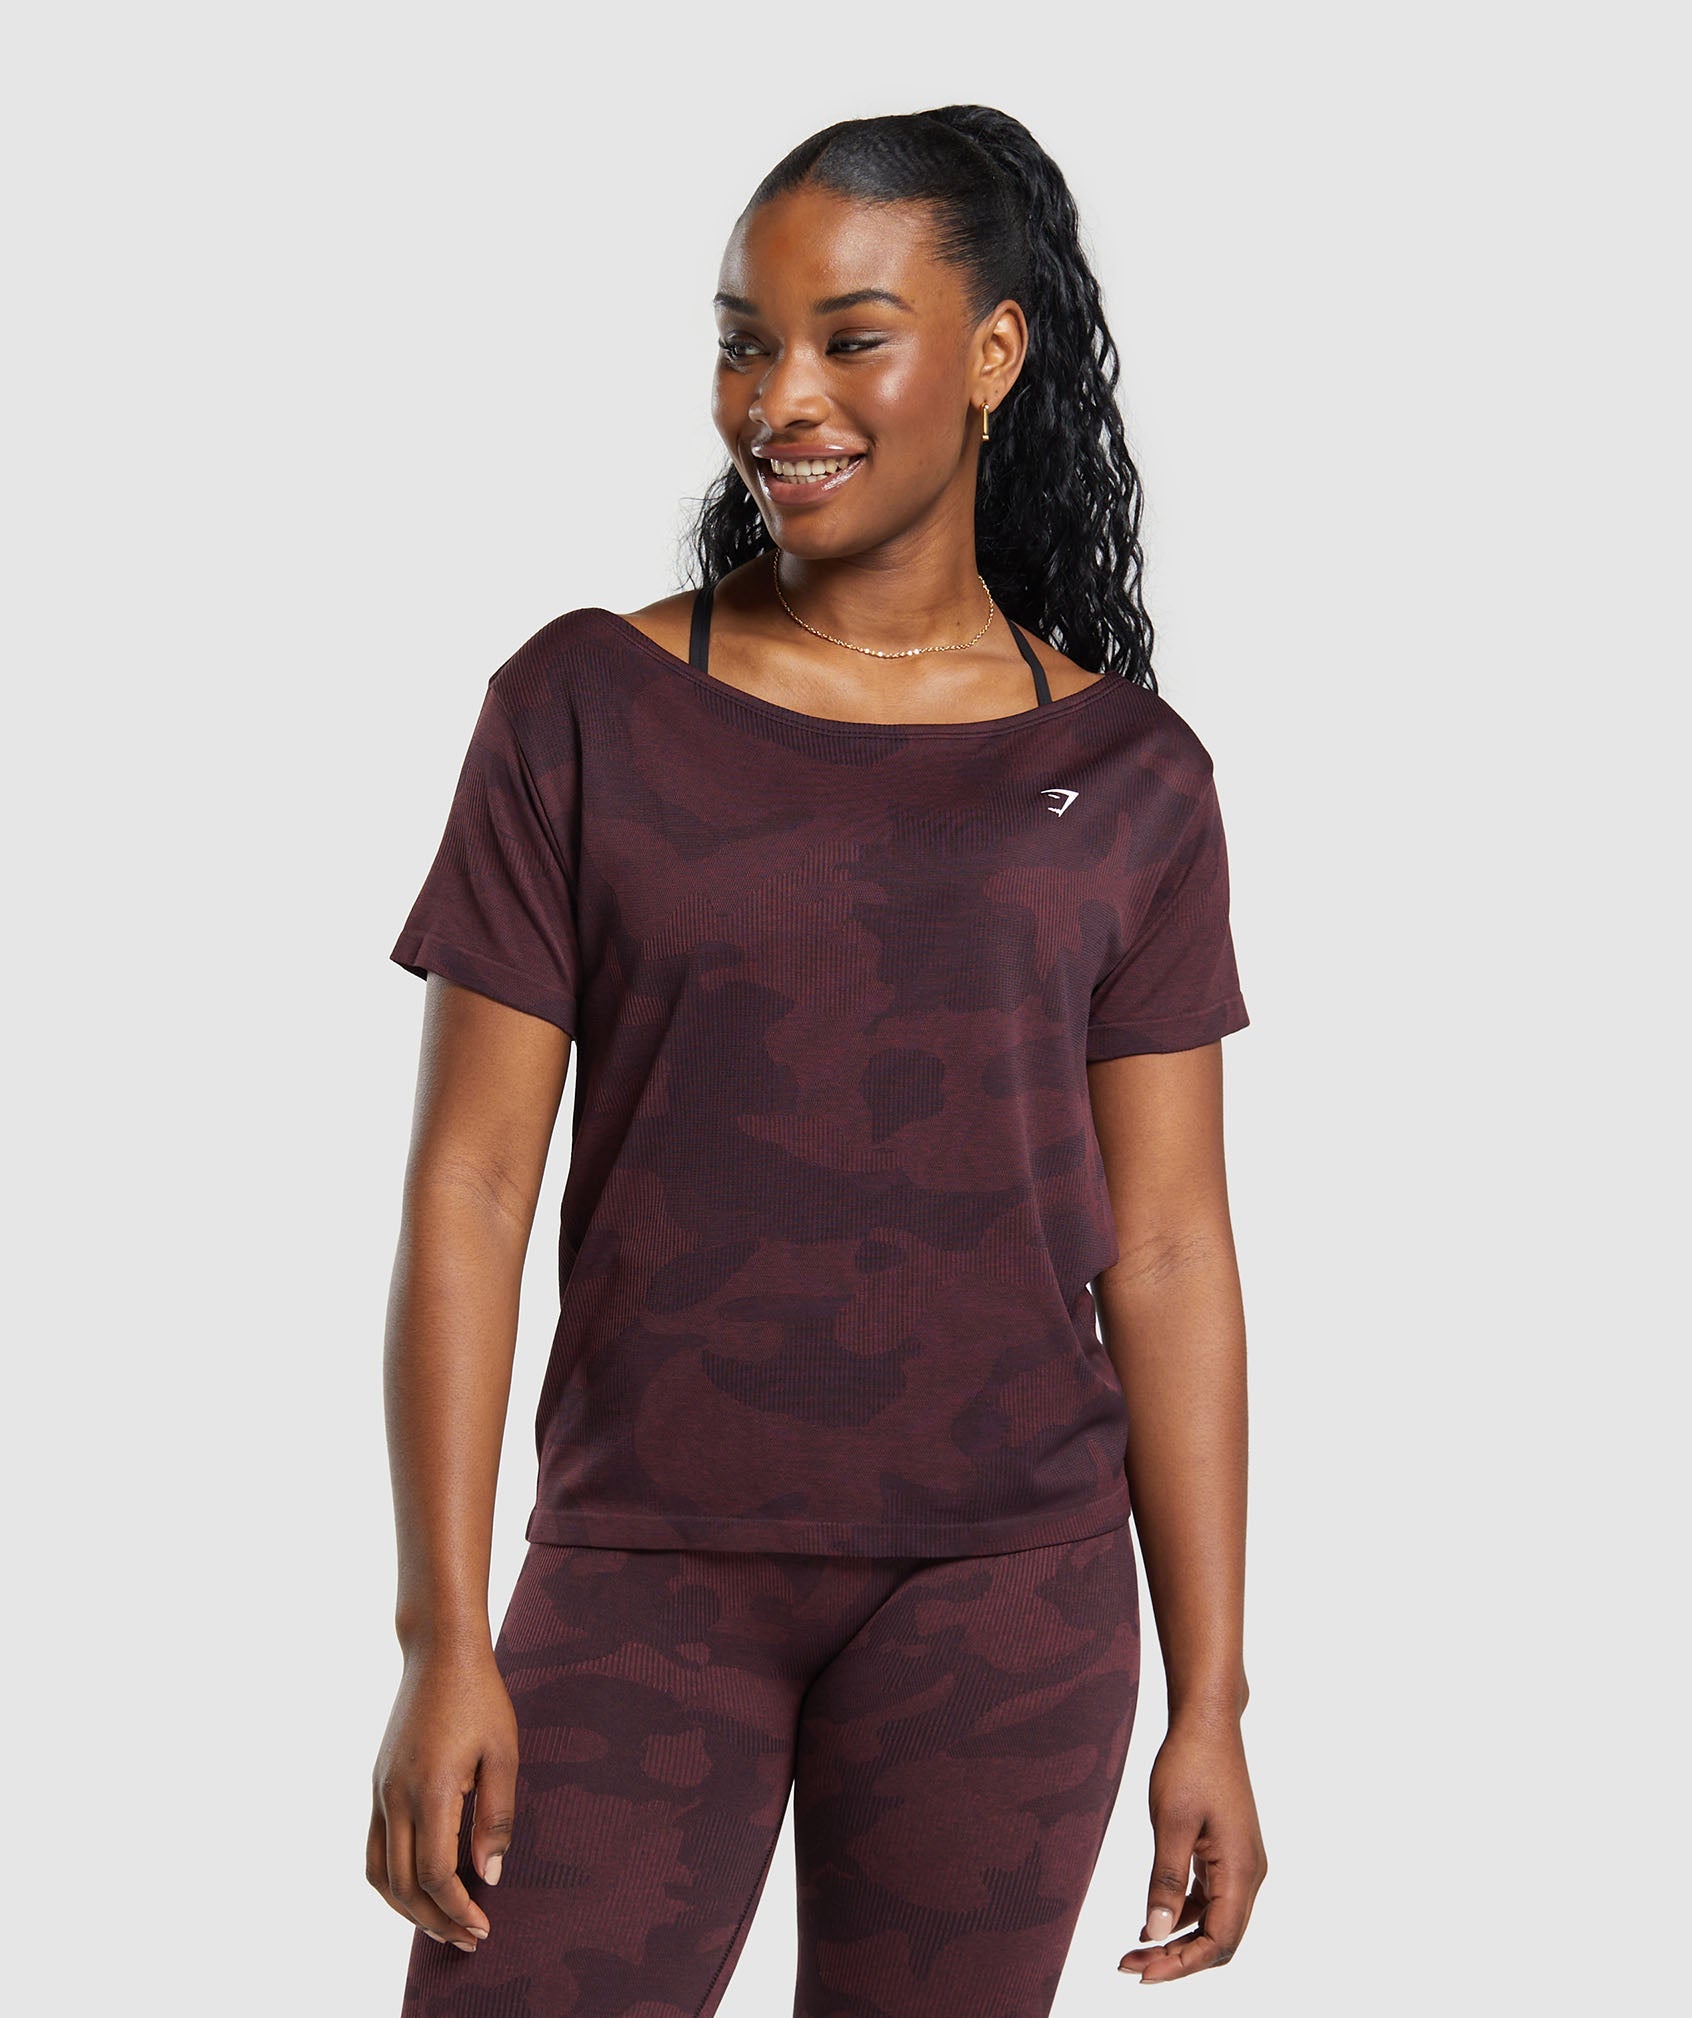 Adapt Camo Seamless T-Shirt in Plum Brown/Burgundy Brown